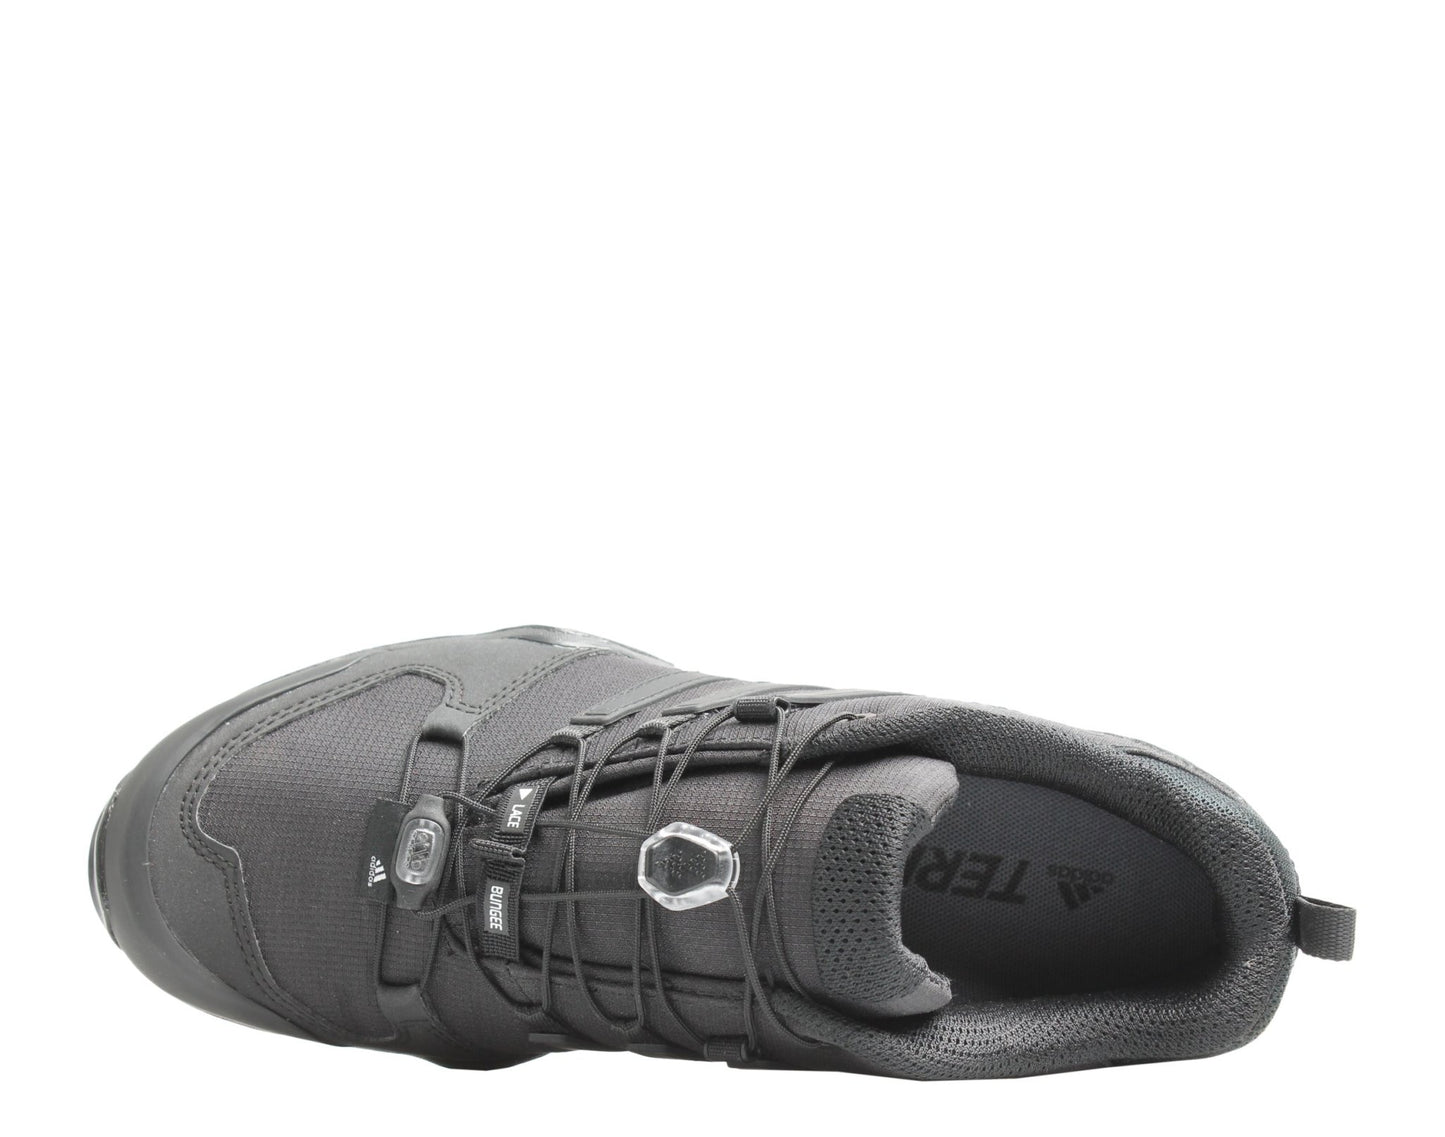 Adidas Terrex Swift R2 Triple Black/Black/Black Men's Hiking Shoes CM7487 - Becauze